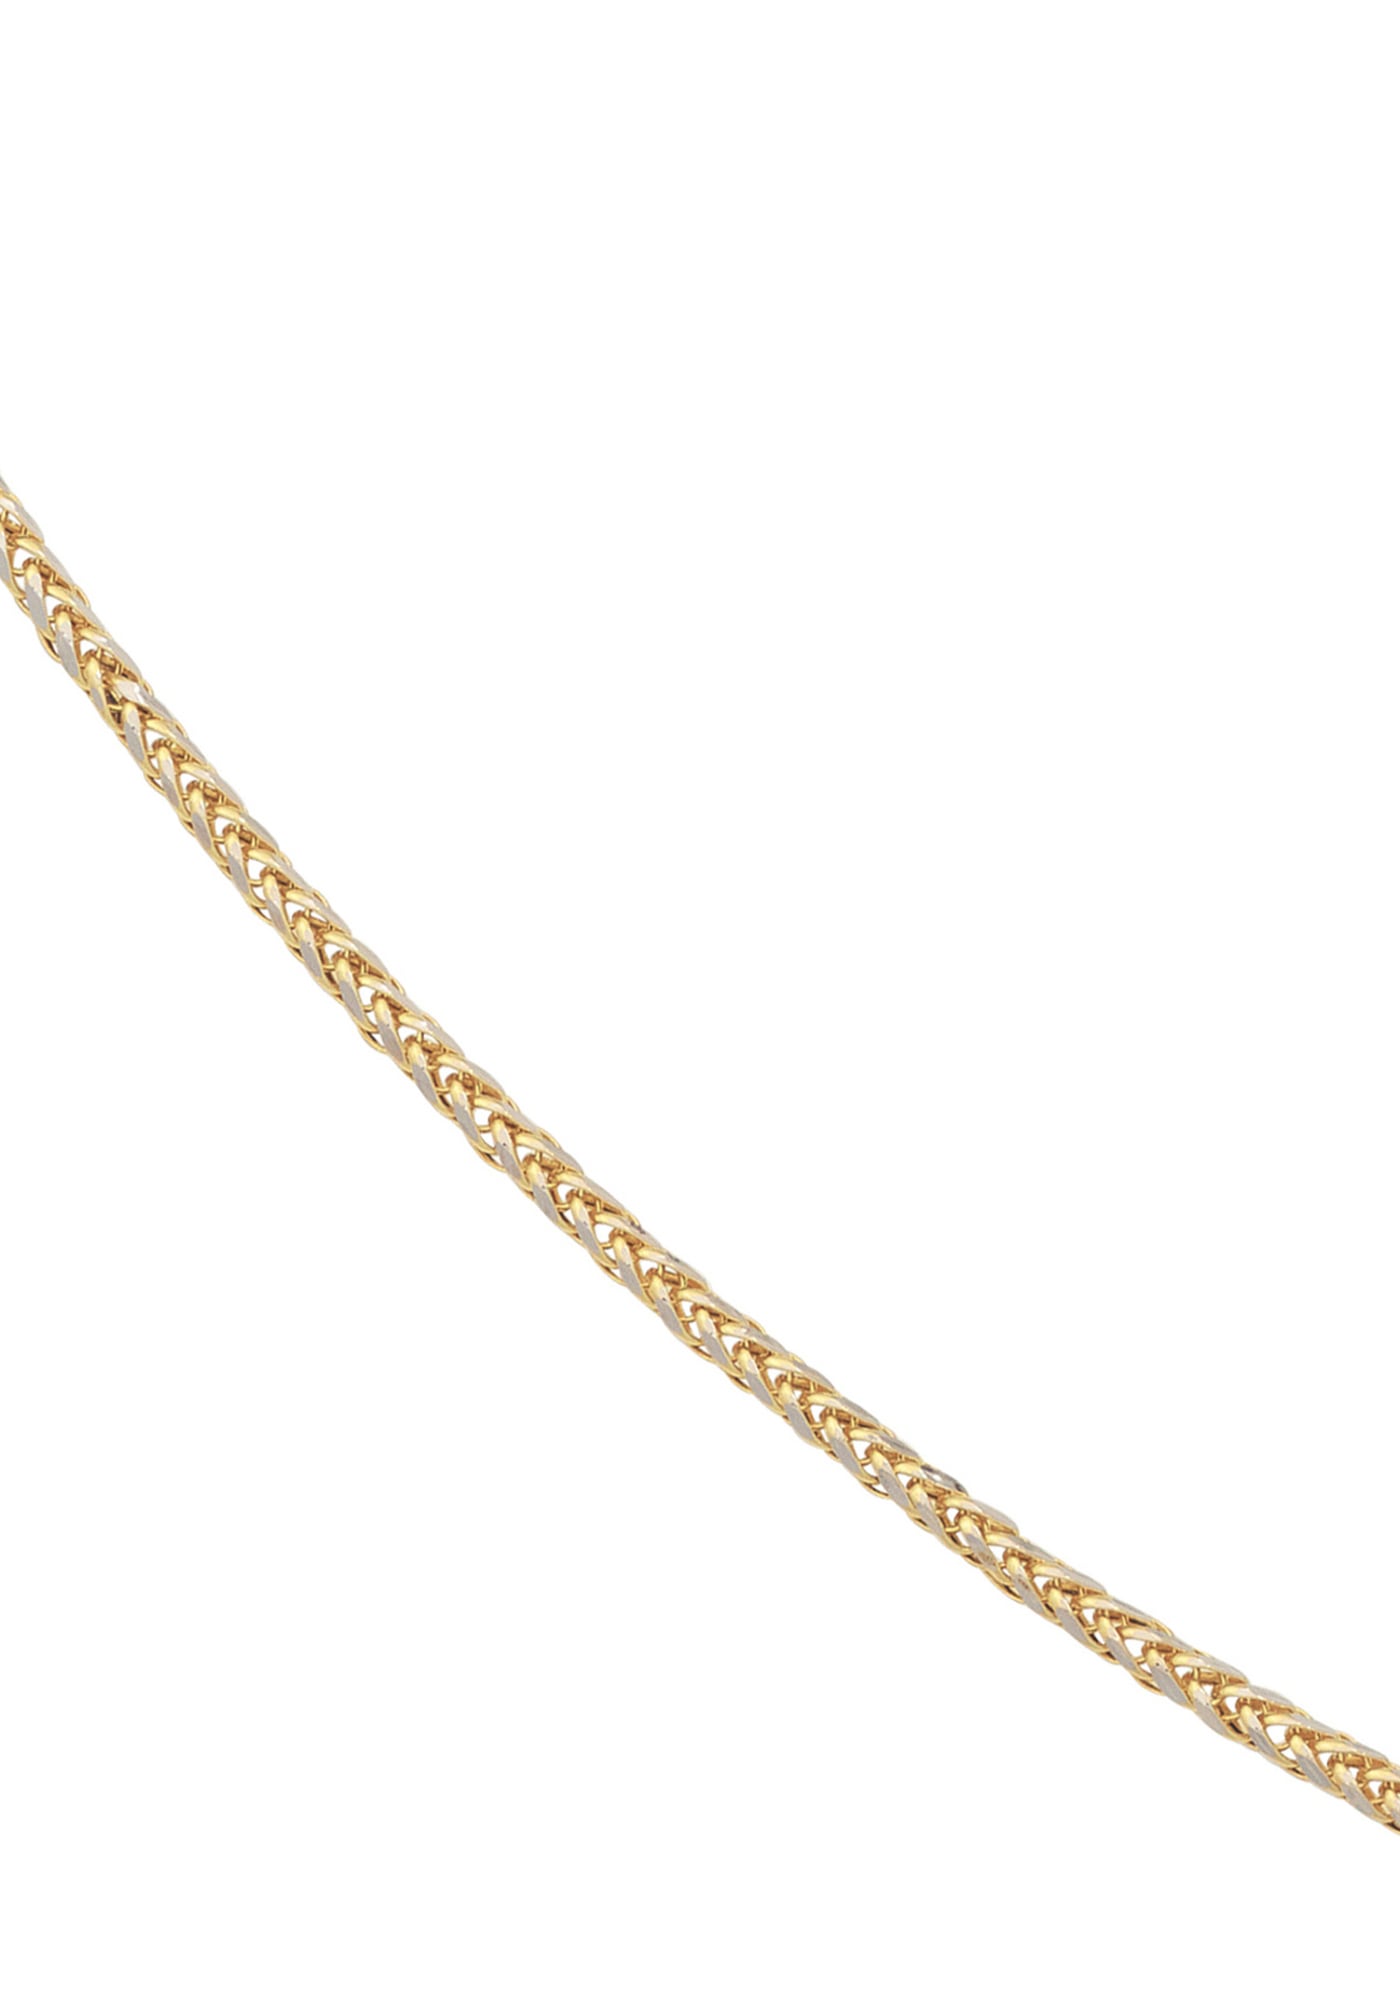 JOBO Goldkette, Zopfkette 585 Gold bicolor 45 cm 1,9 mm online kaufen | BAUR